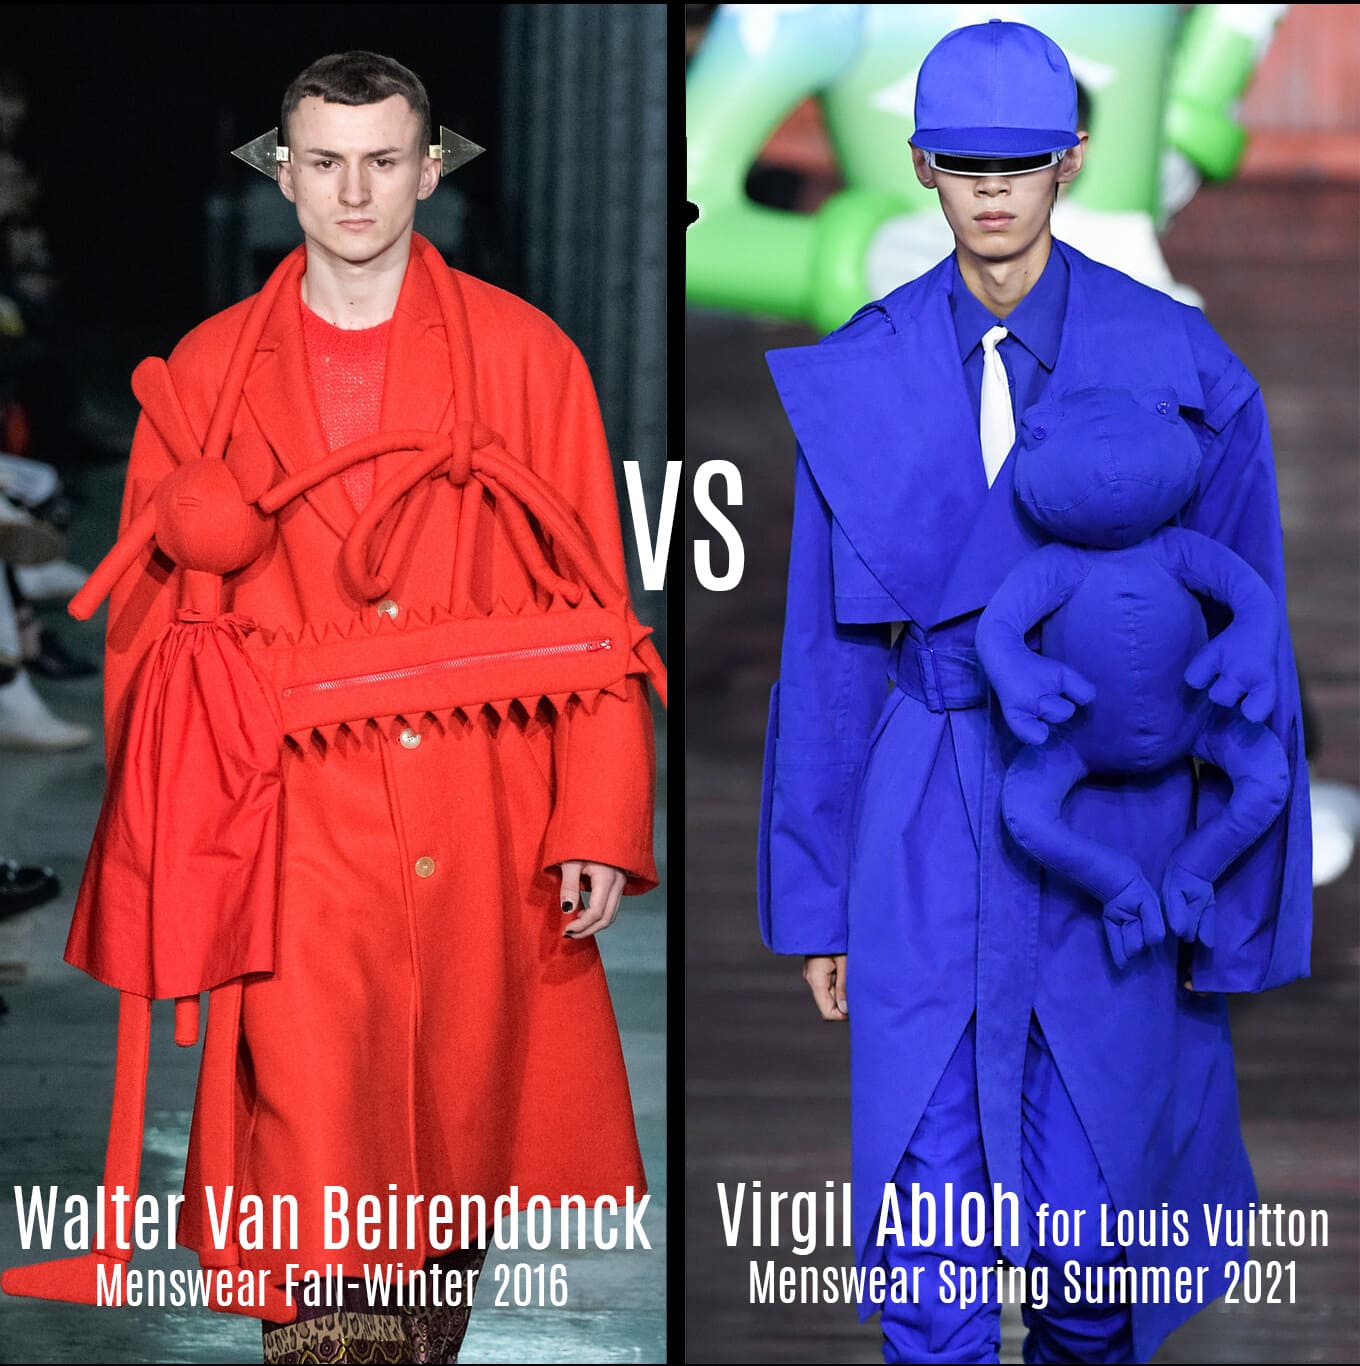 Walter Van Beirendonck Menswear Fall-Winter 2016 VS Virgil Abloh for Louis Vuitton Menswear Spring Summer 2021